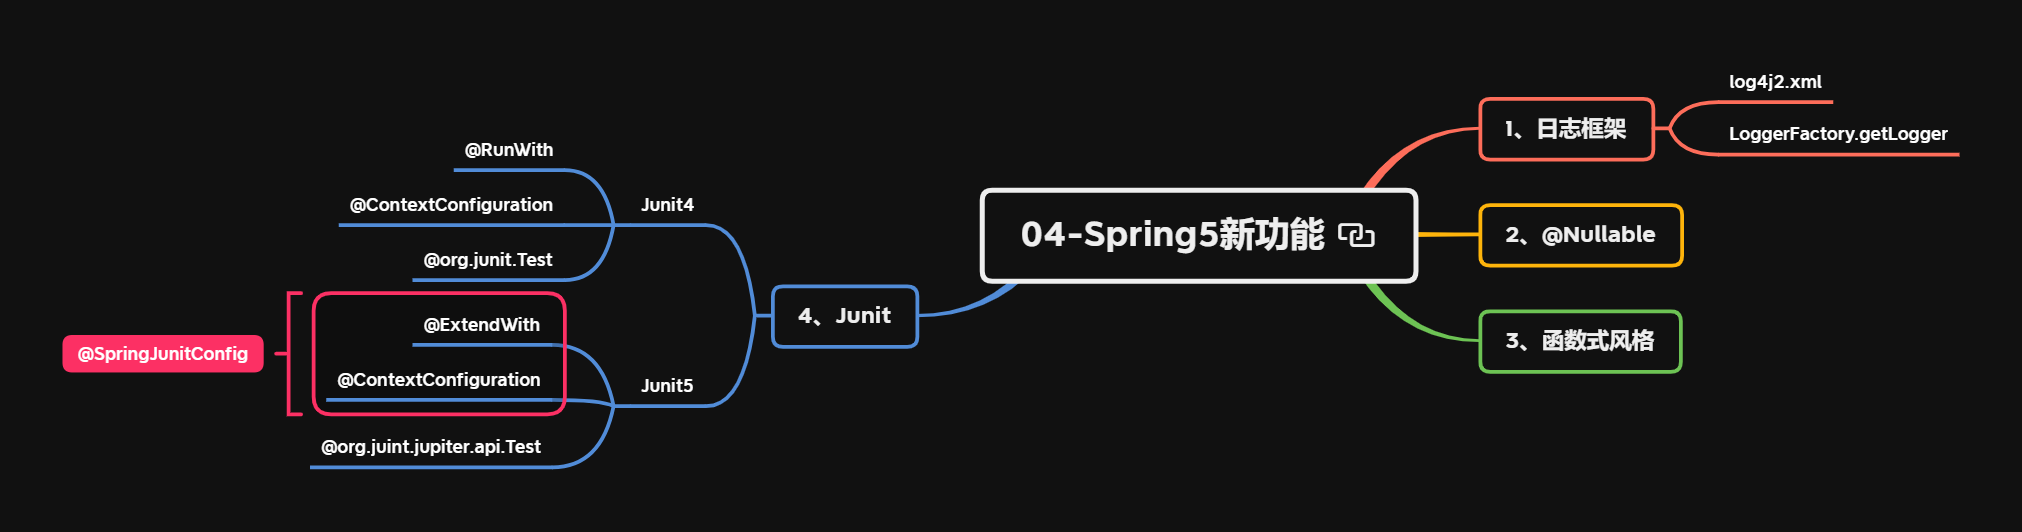 04-Spring5新功能 - 图6